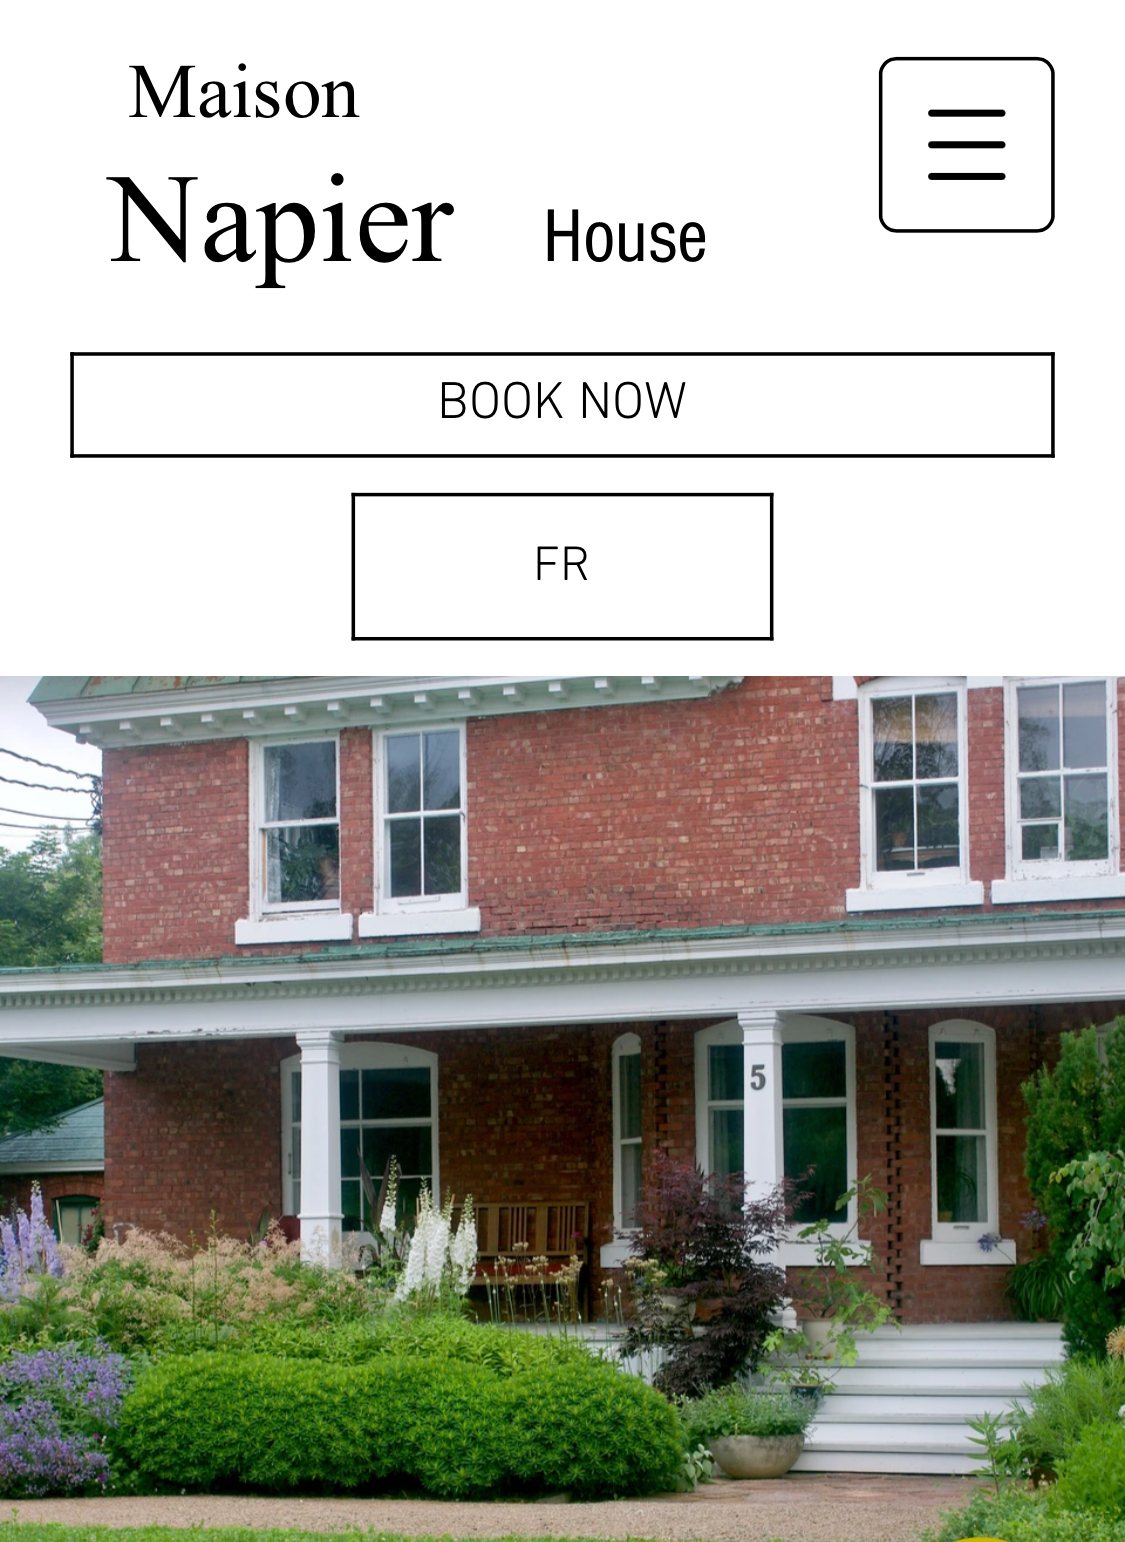 Maison Napier